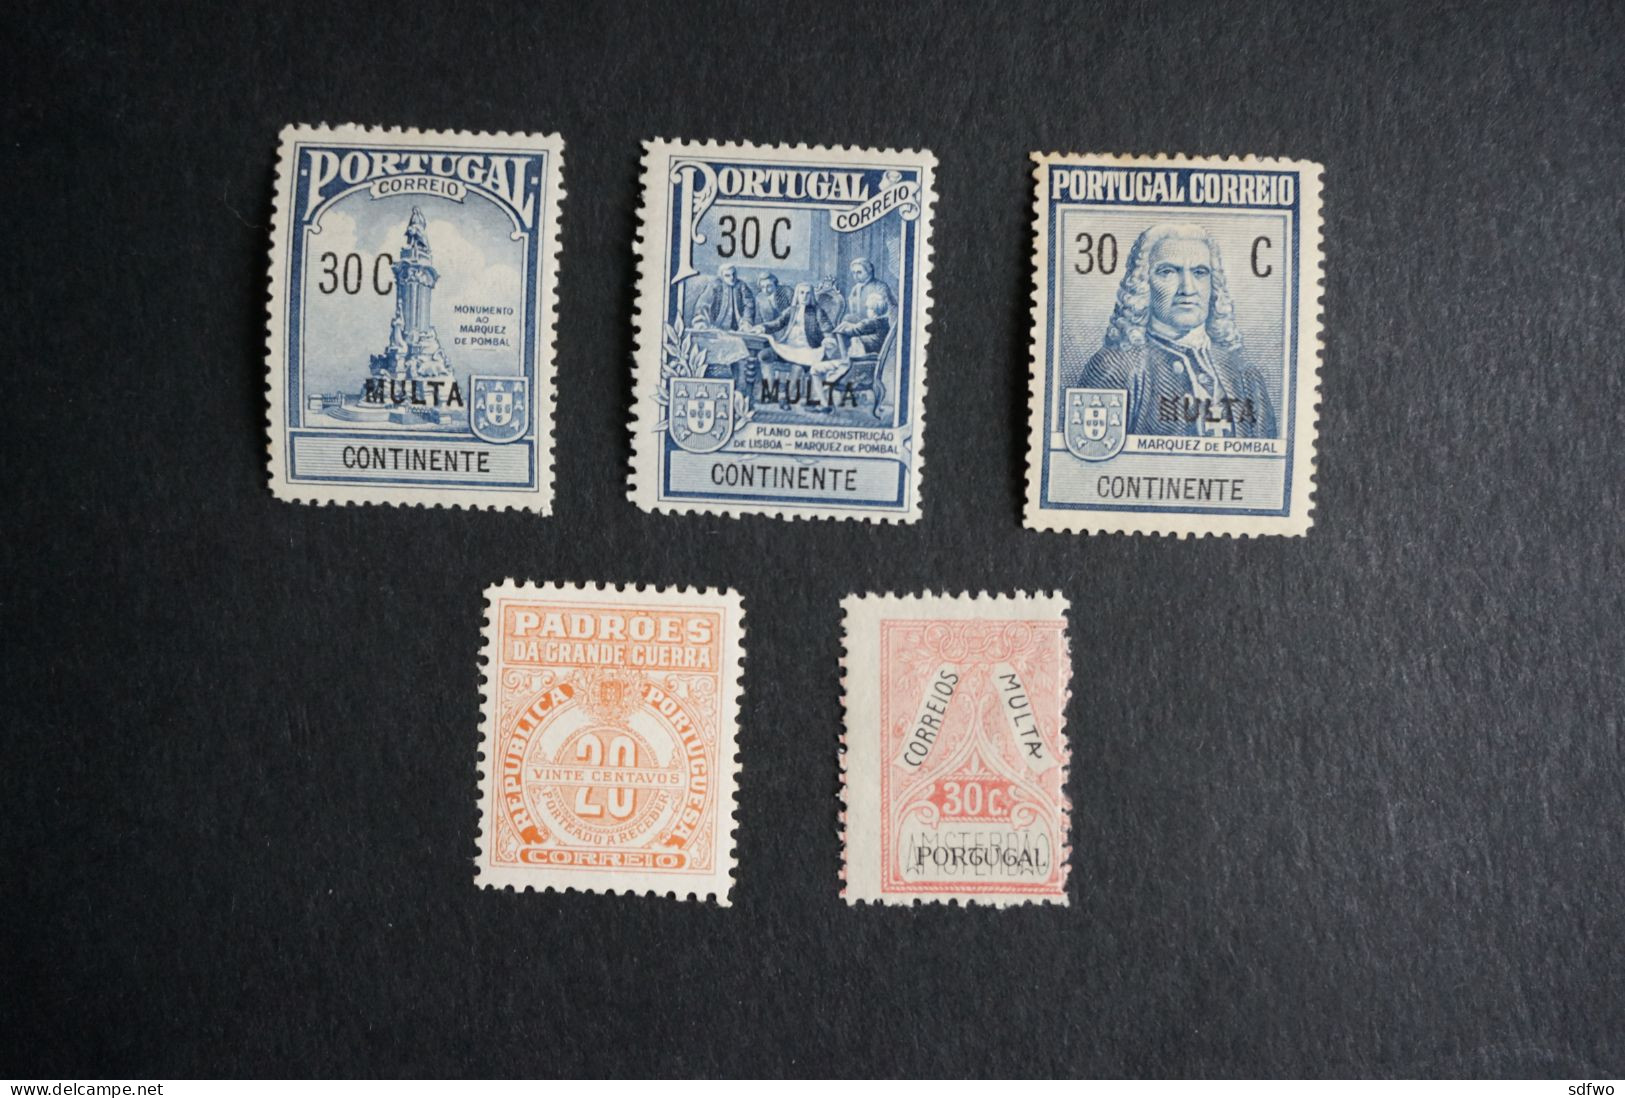 (T2) Portugal 1925/1928 - Postal Tax / Postage Due, WWI, Olympics - MH - Nuevos